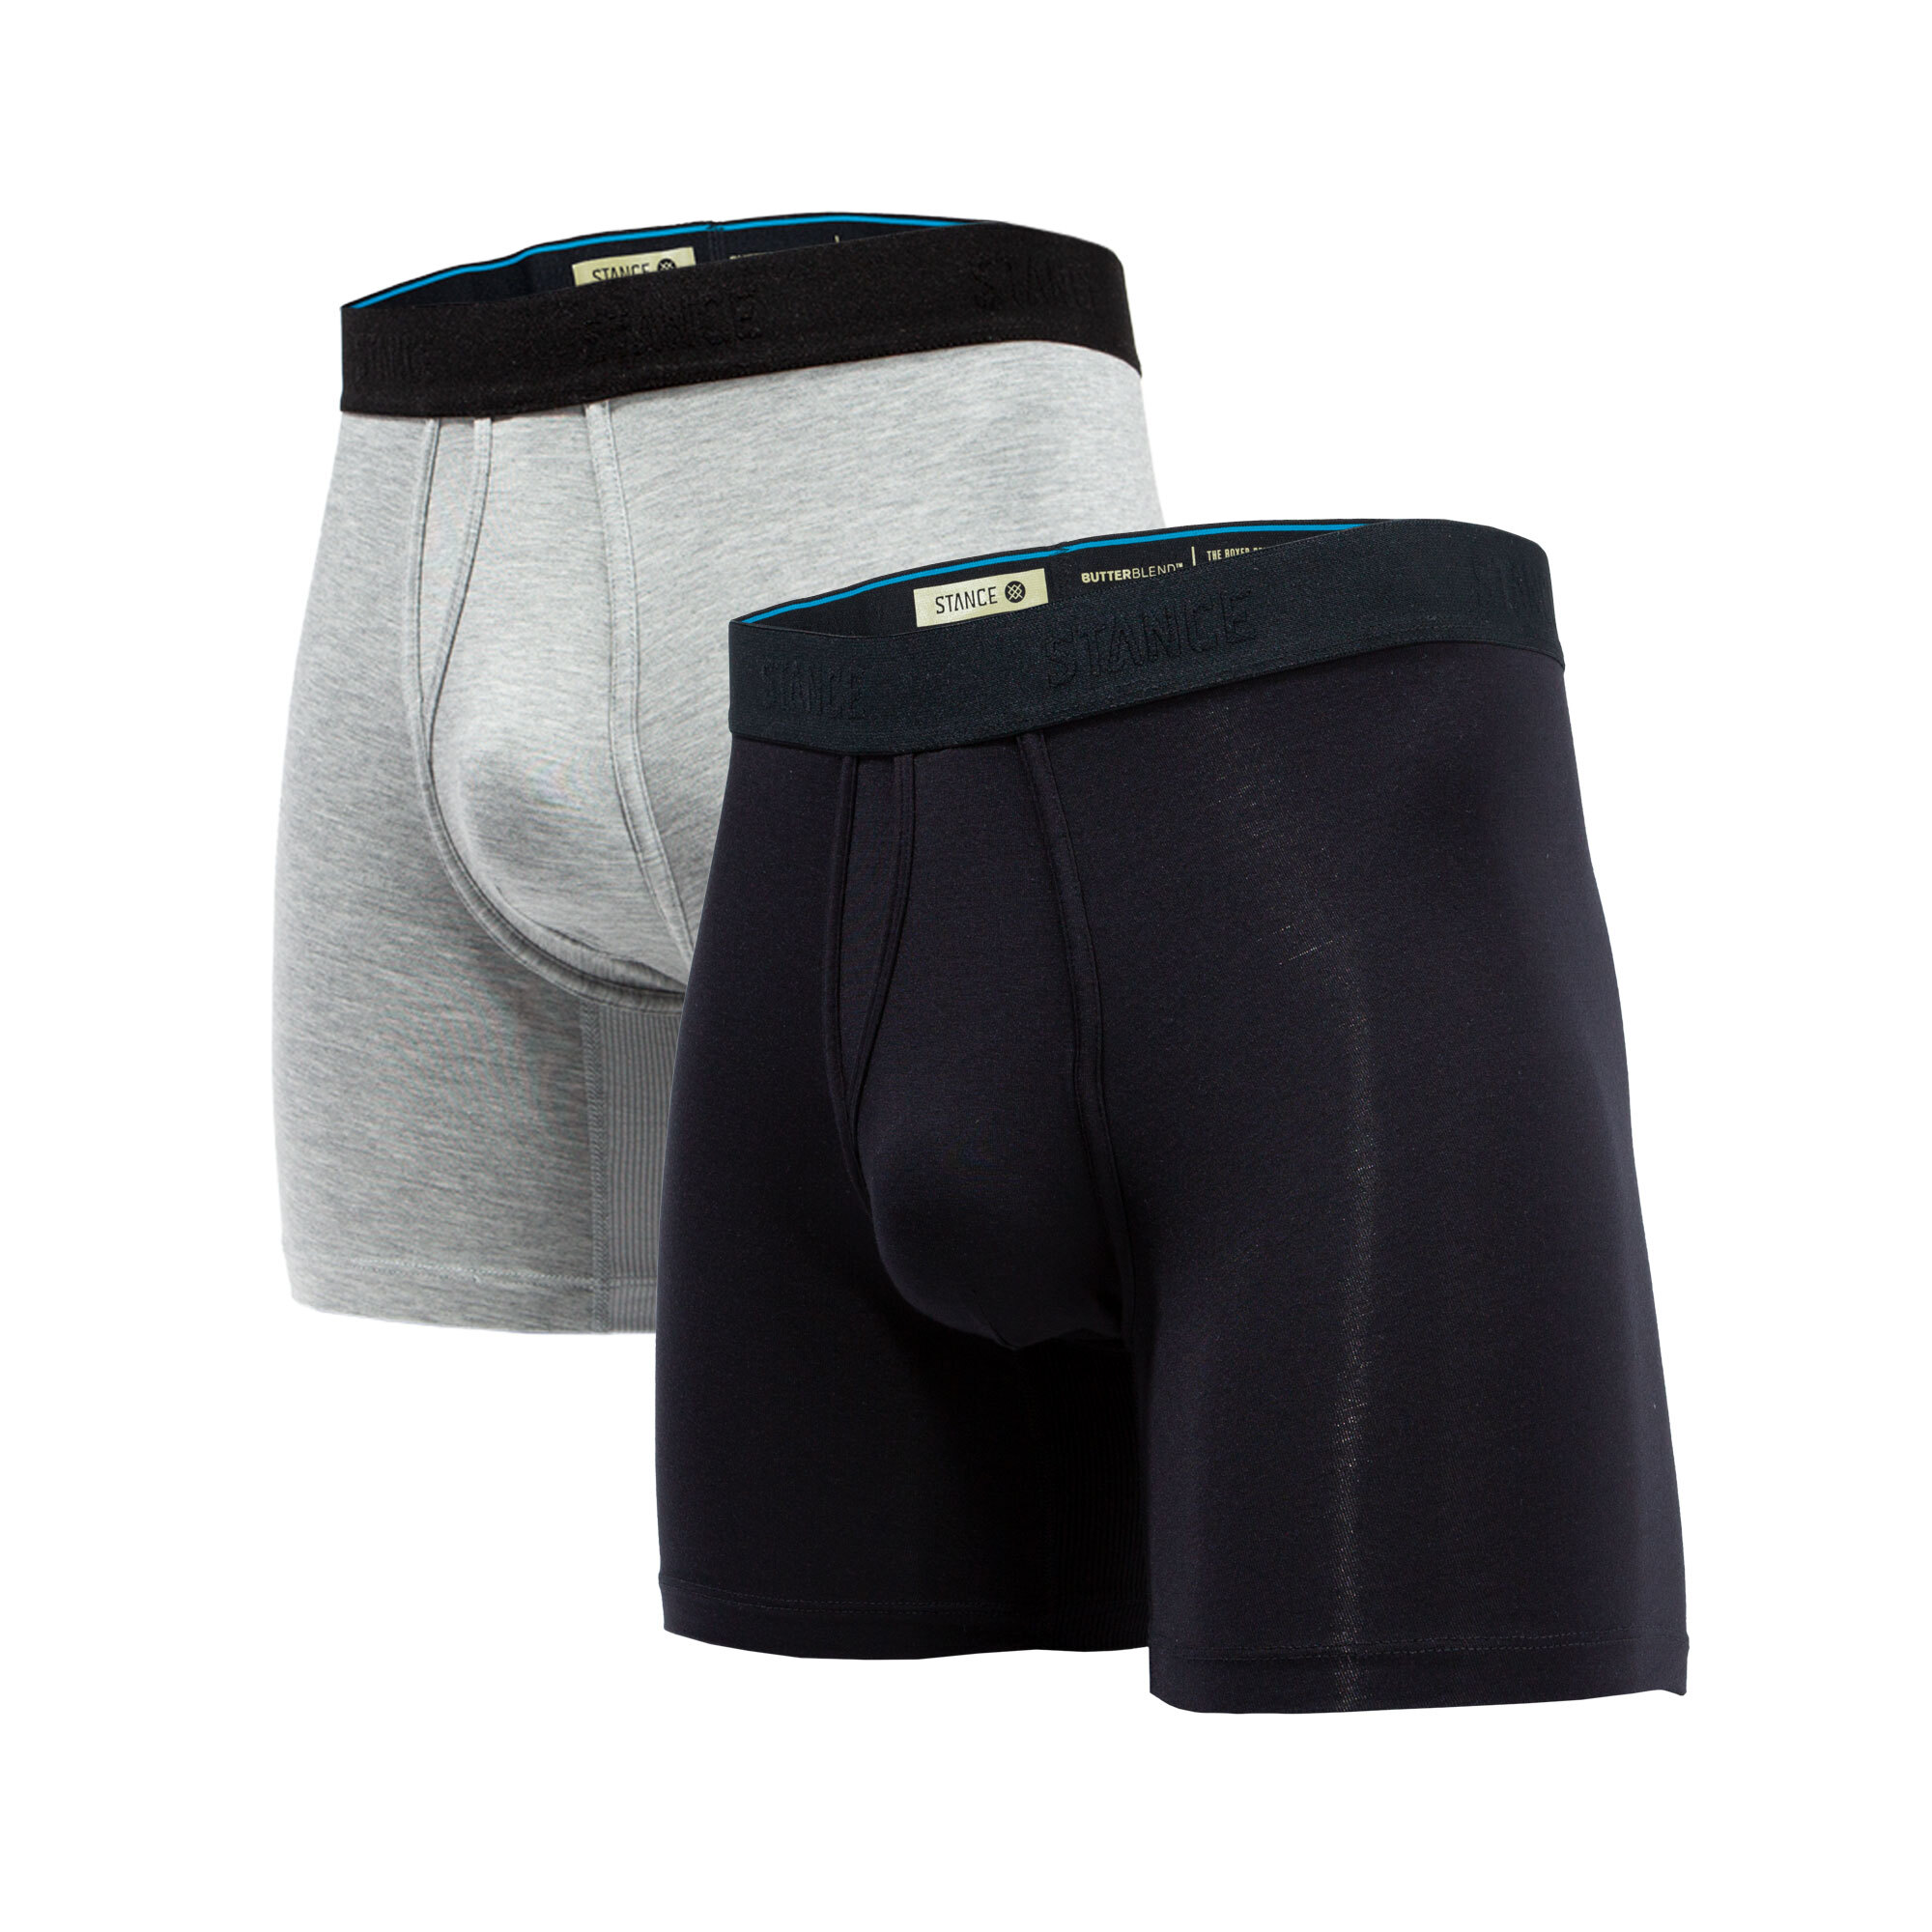 Men's Underwear: Shop Comfortable Underwear for Men